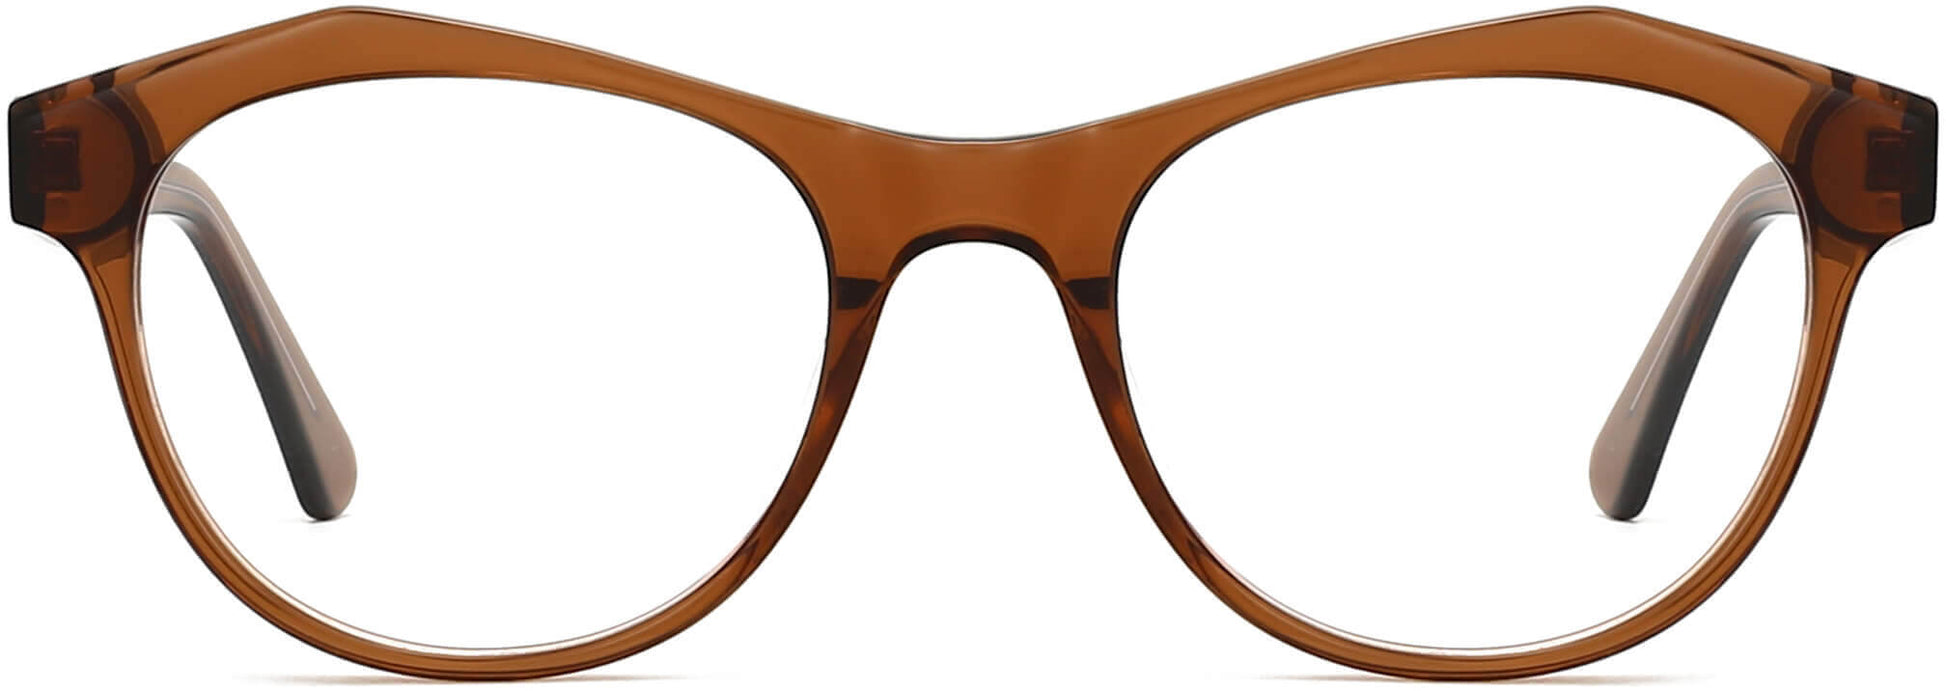 Myranda Cateye Brown Eyeglasses from ANRRI, front view